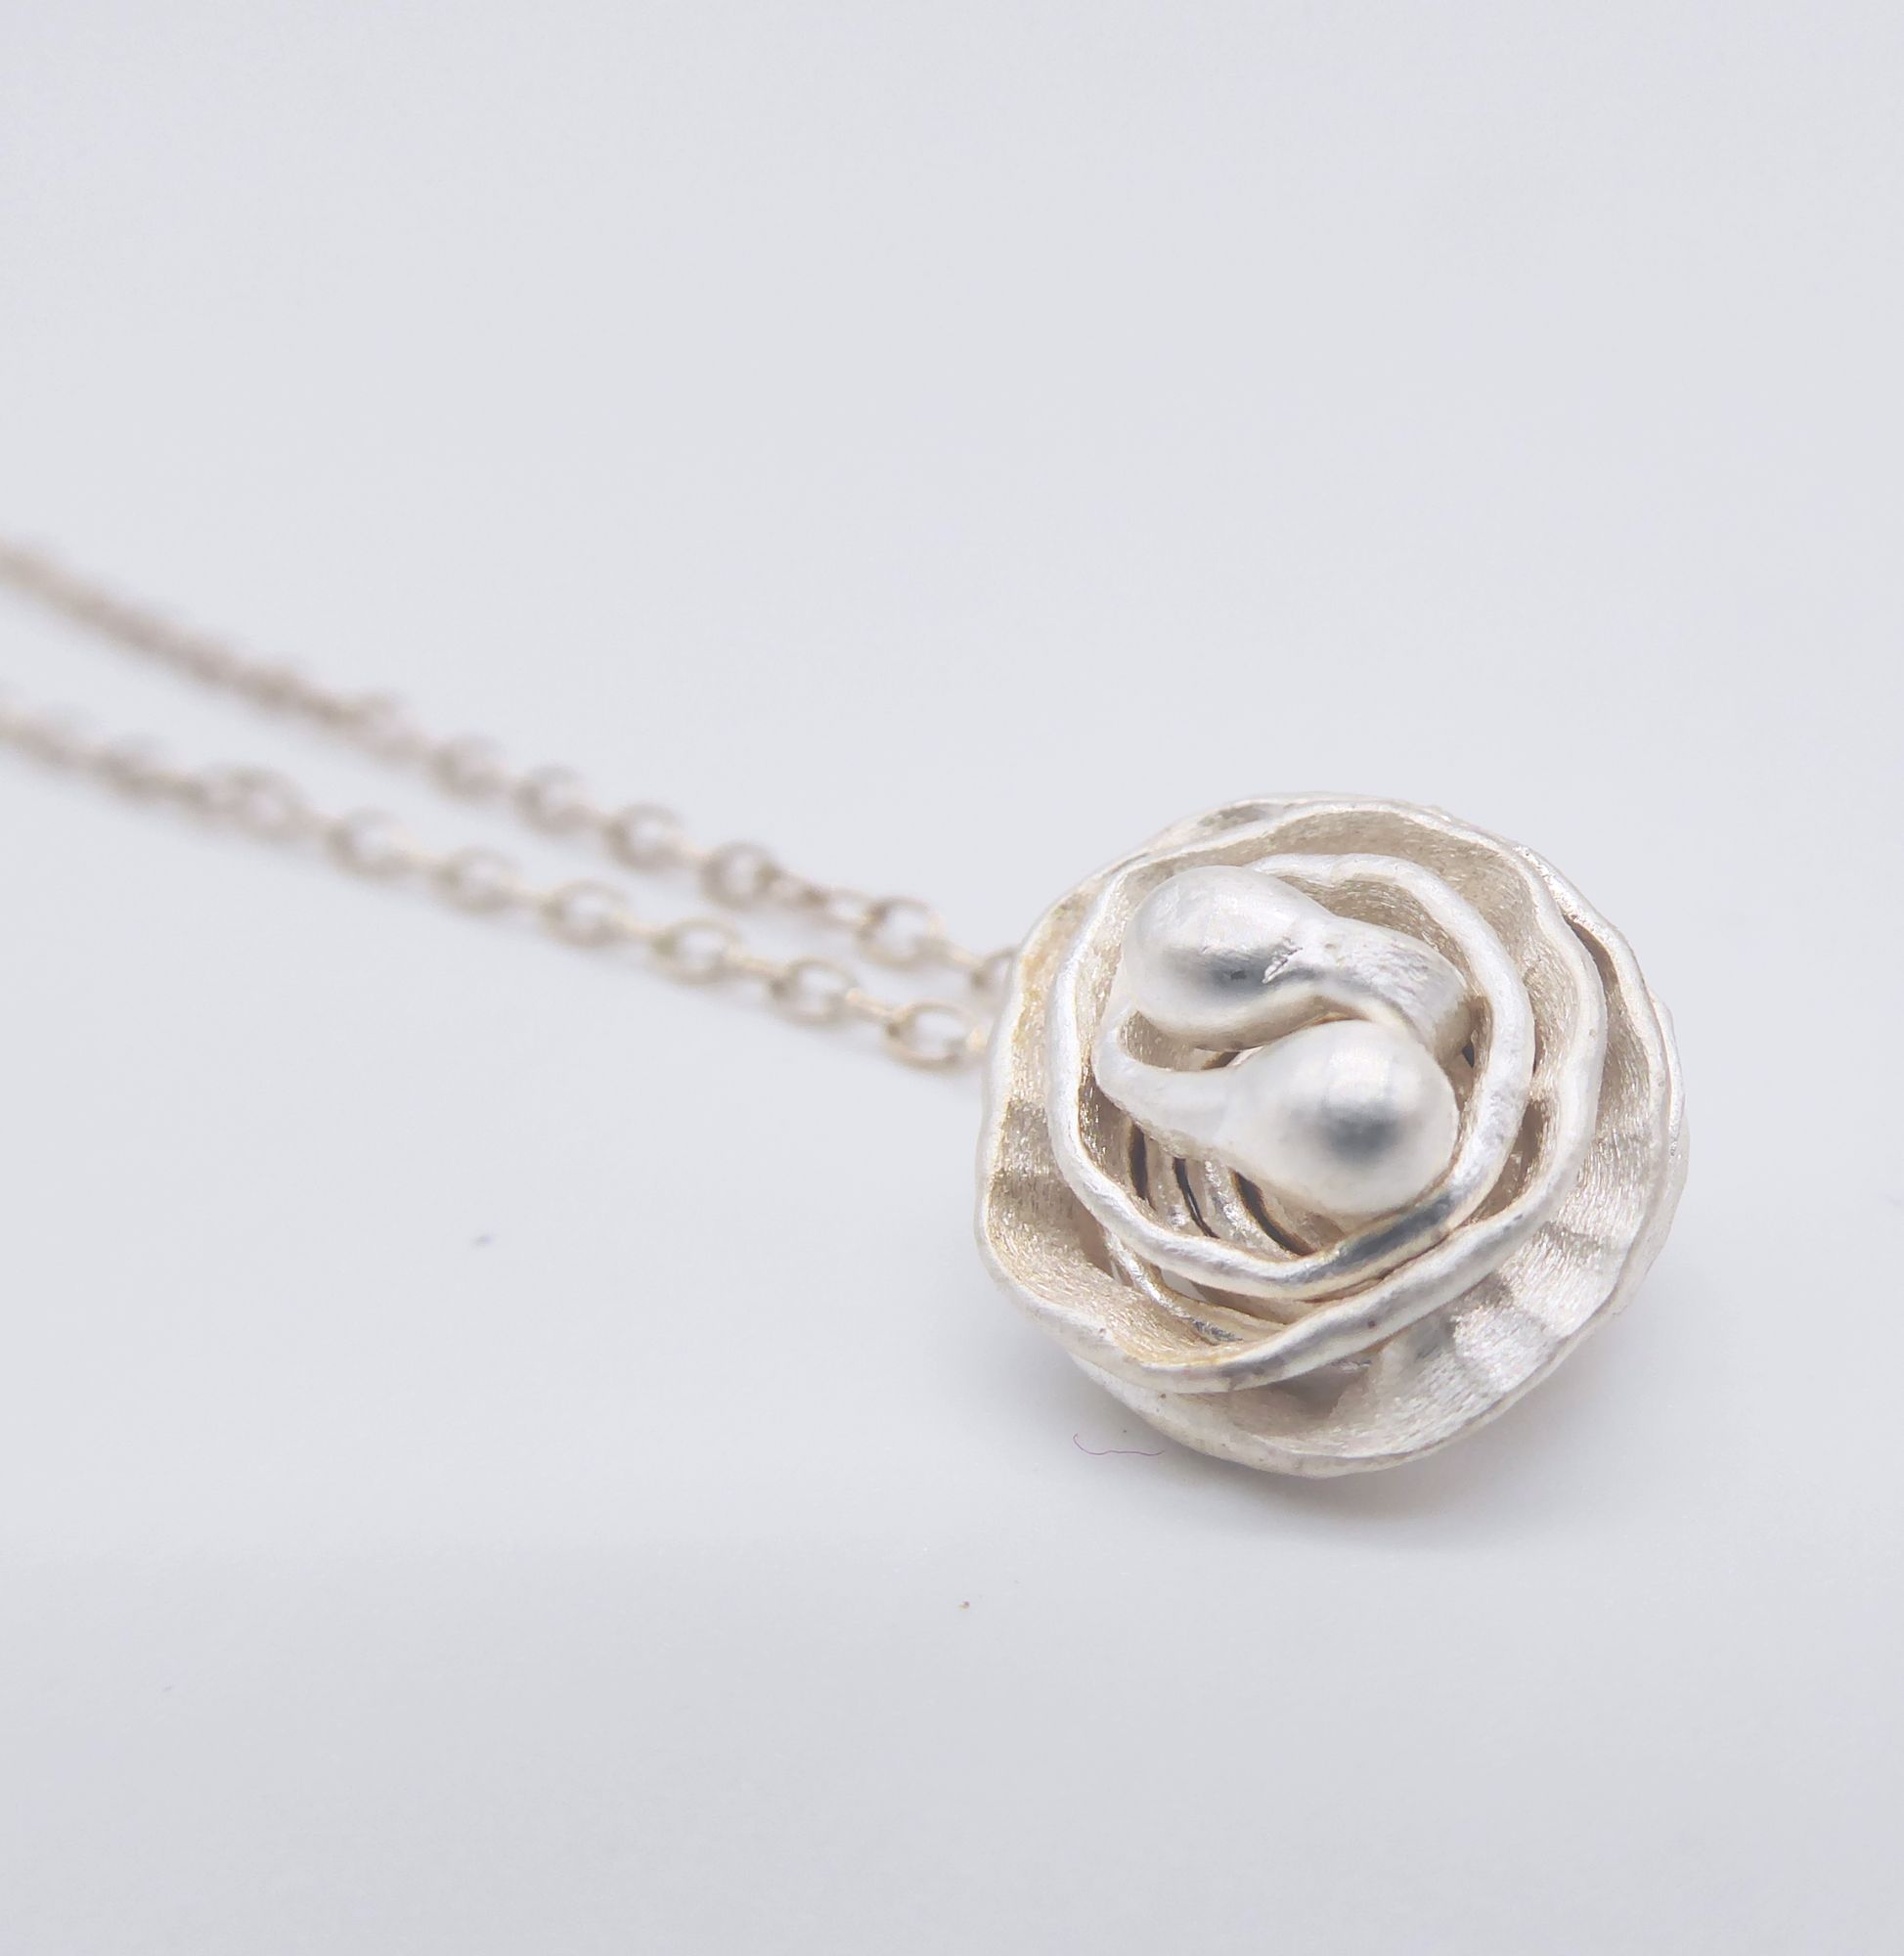 Silver rose pendant